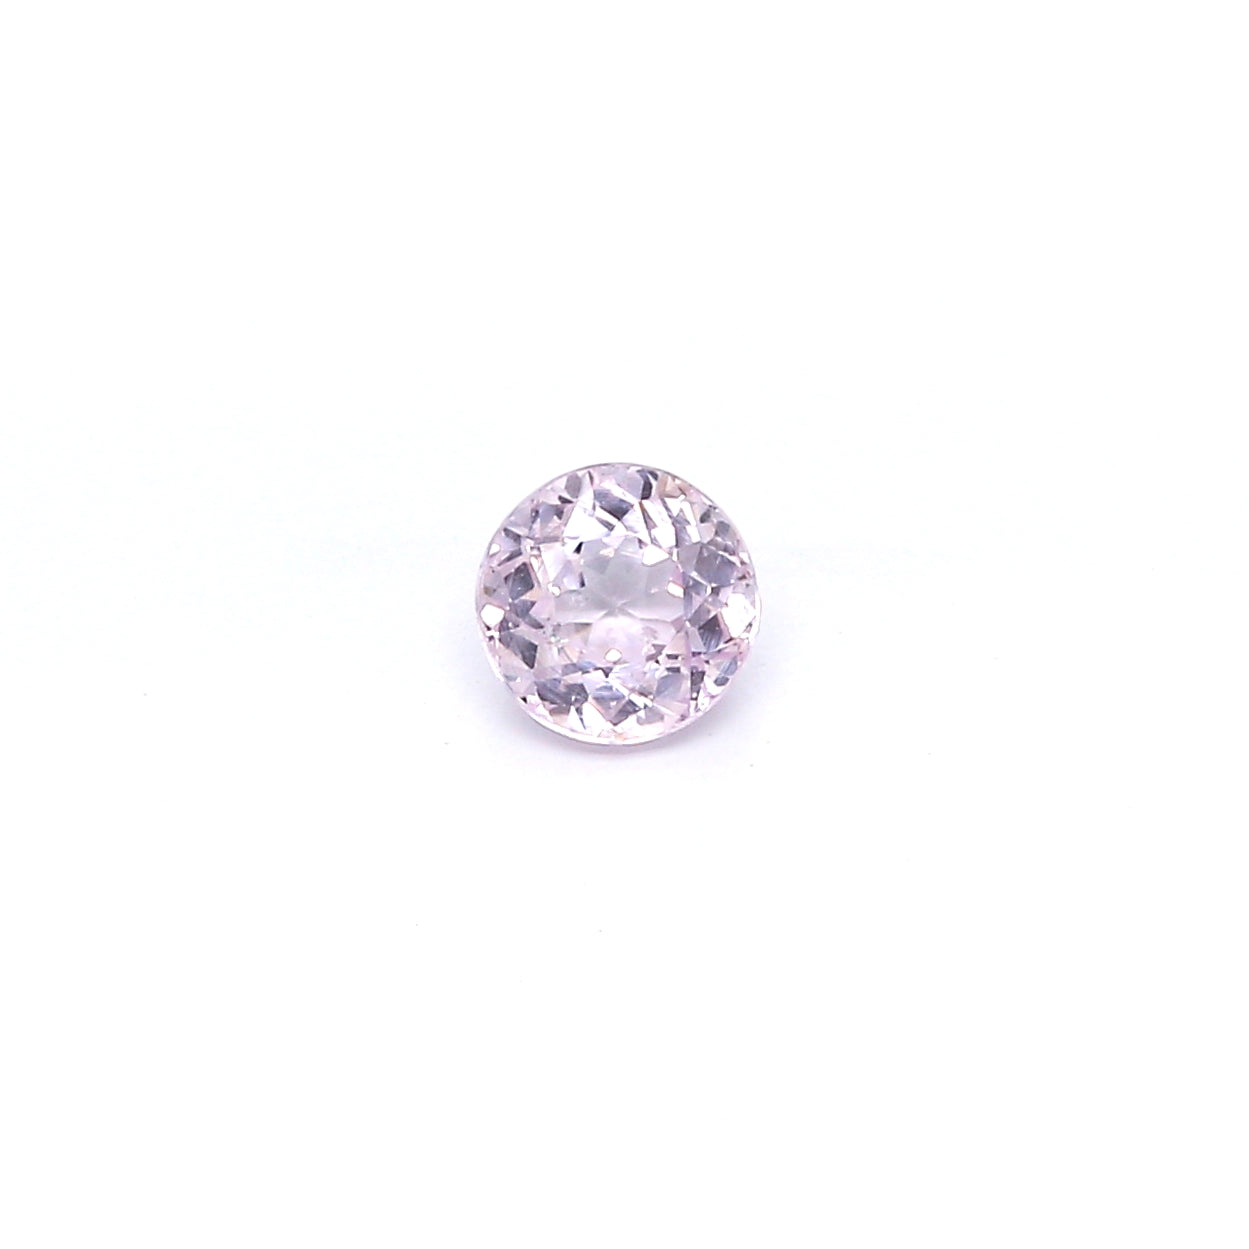 0.60ct Pink, Round Sapphire, Heated, Madagascar - 4.93 - 4.99 x 2.97mm